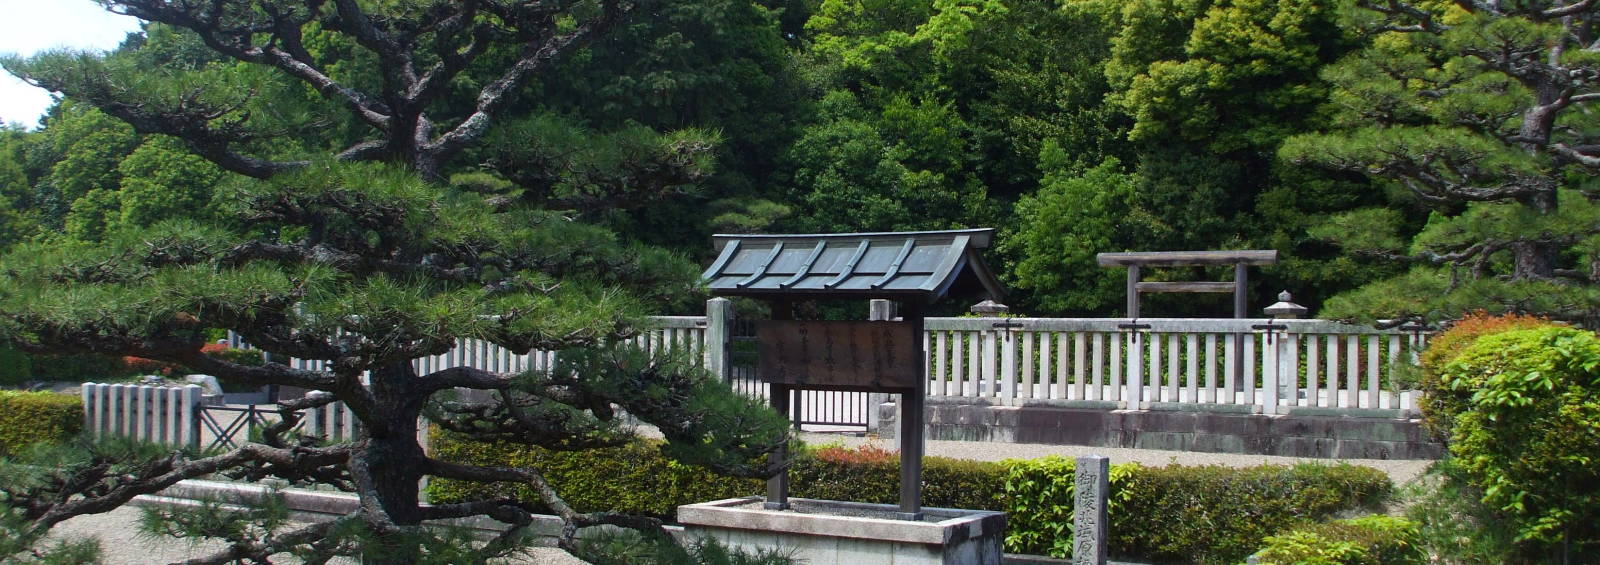 Kofun of Emperor Seimu near Nara, Japan.